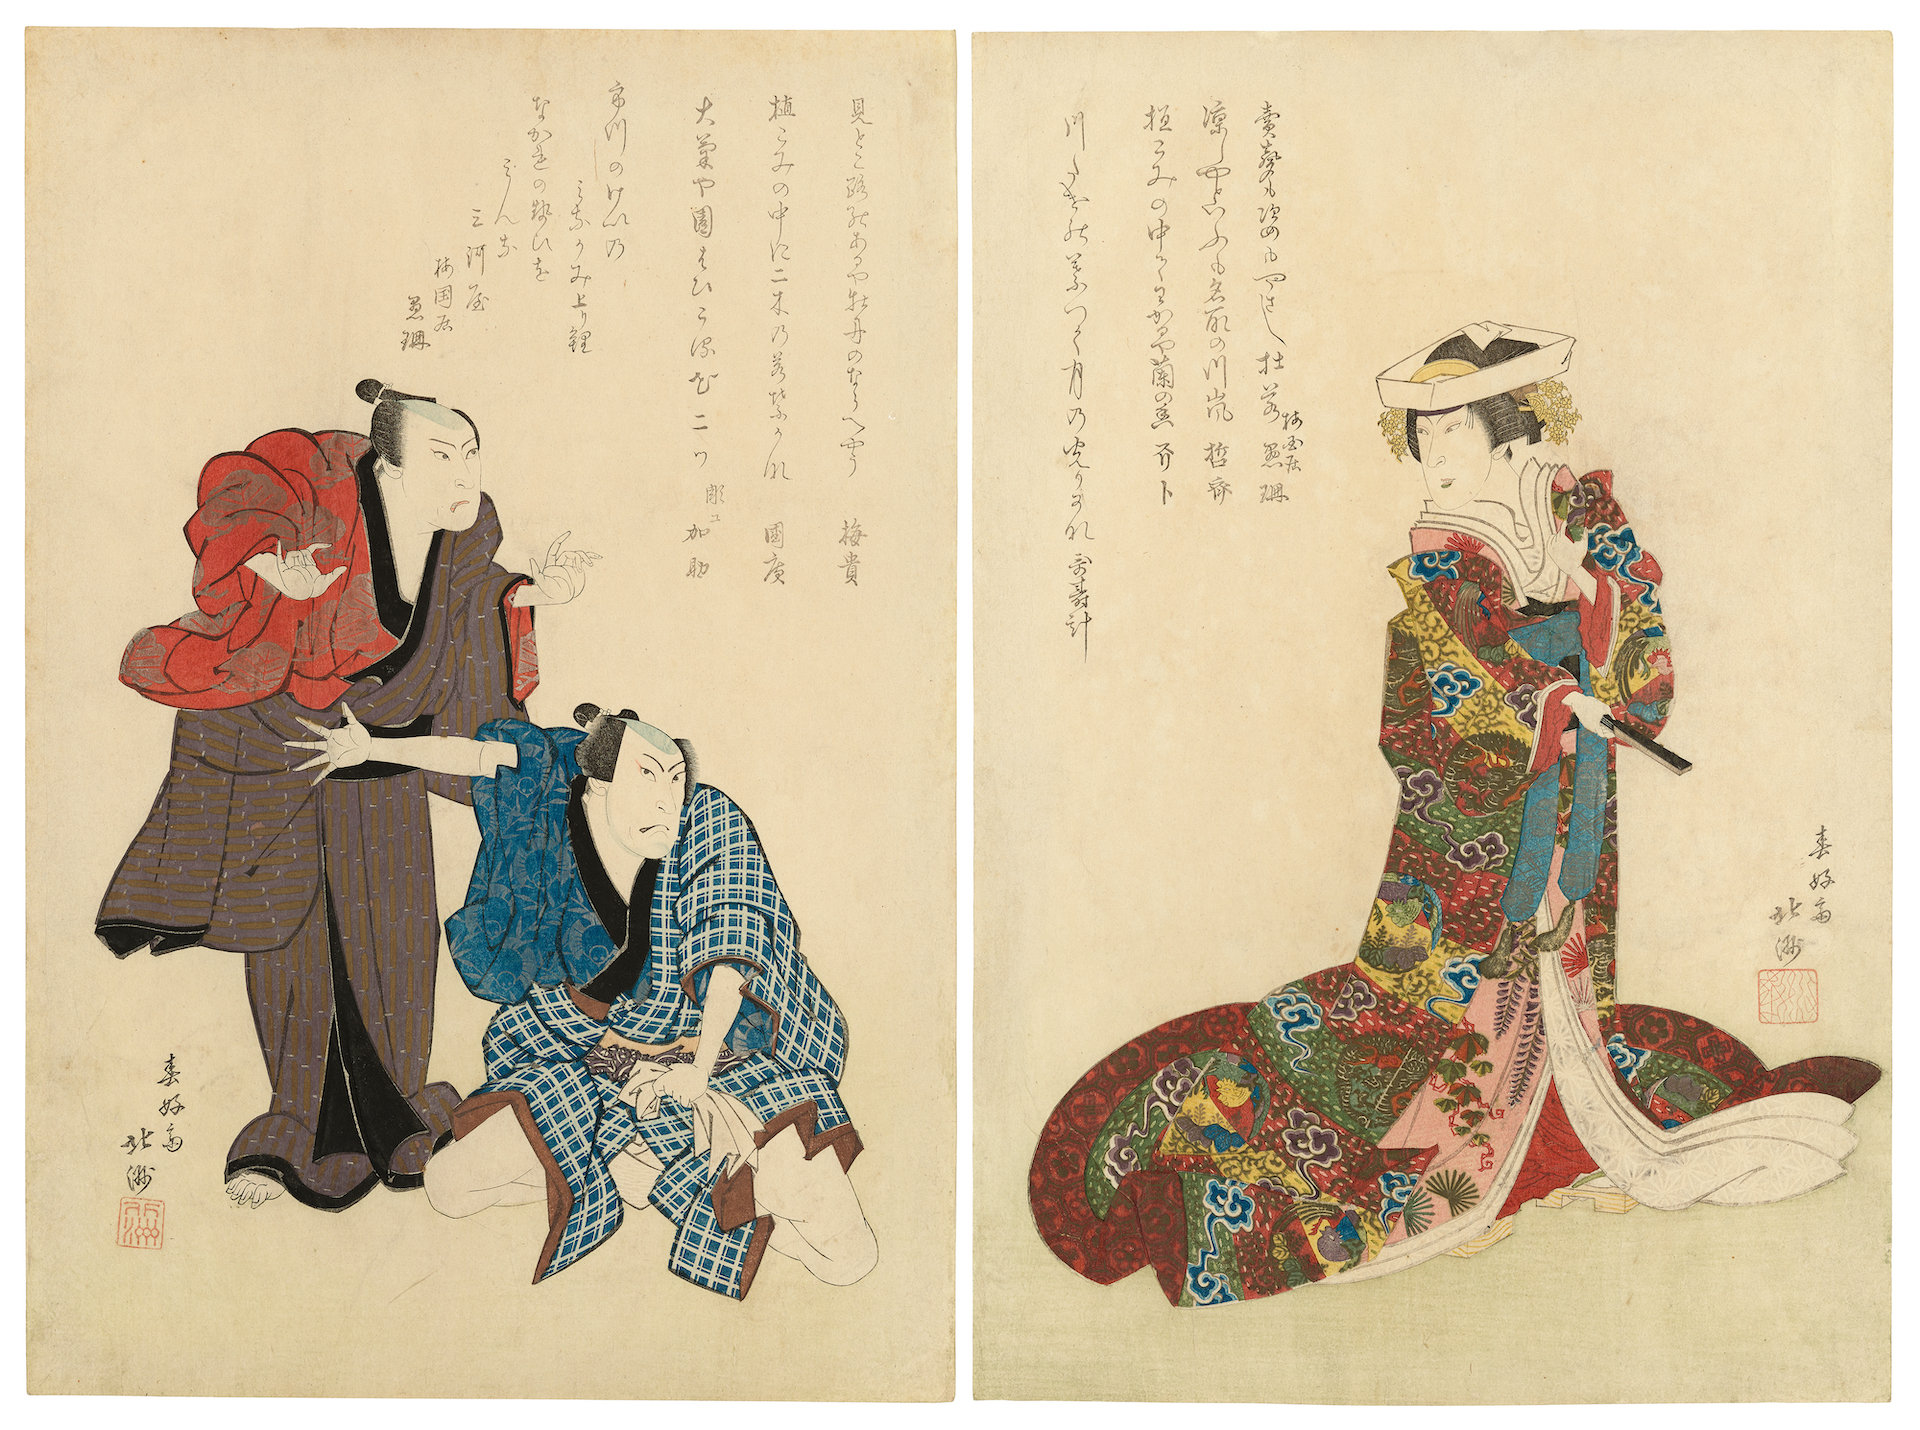 Shunkosai Hokushu (act. circa 1810-32), The actors Nakamura Matsue III in the role of Otaka, Ichikawa Ebijuro I as Mokuemon, and Ichikawa Danzo V as Yashichi, woodblock print on deluxe paper, 1824, vertical oban diptych (each sheet): 39.2 x 26.3 cm.